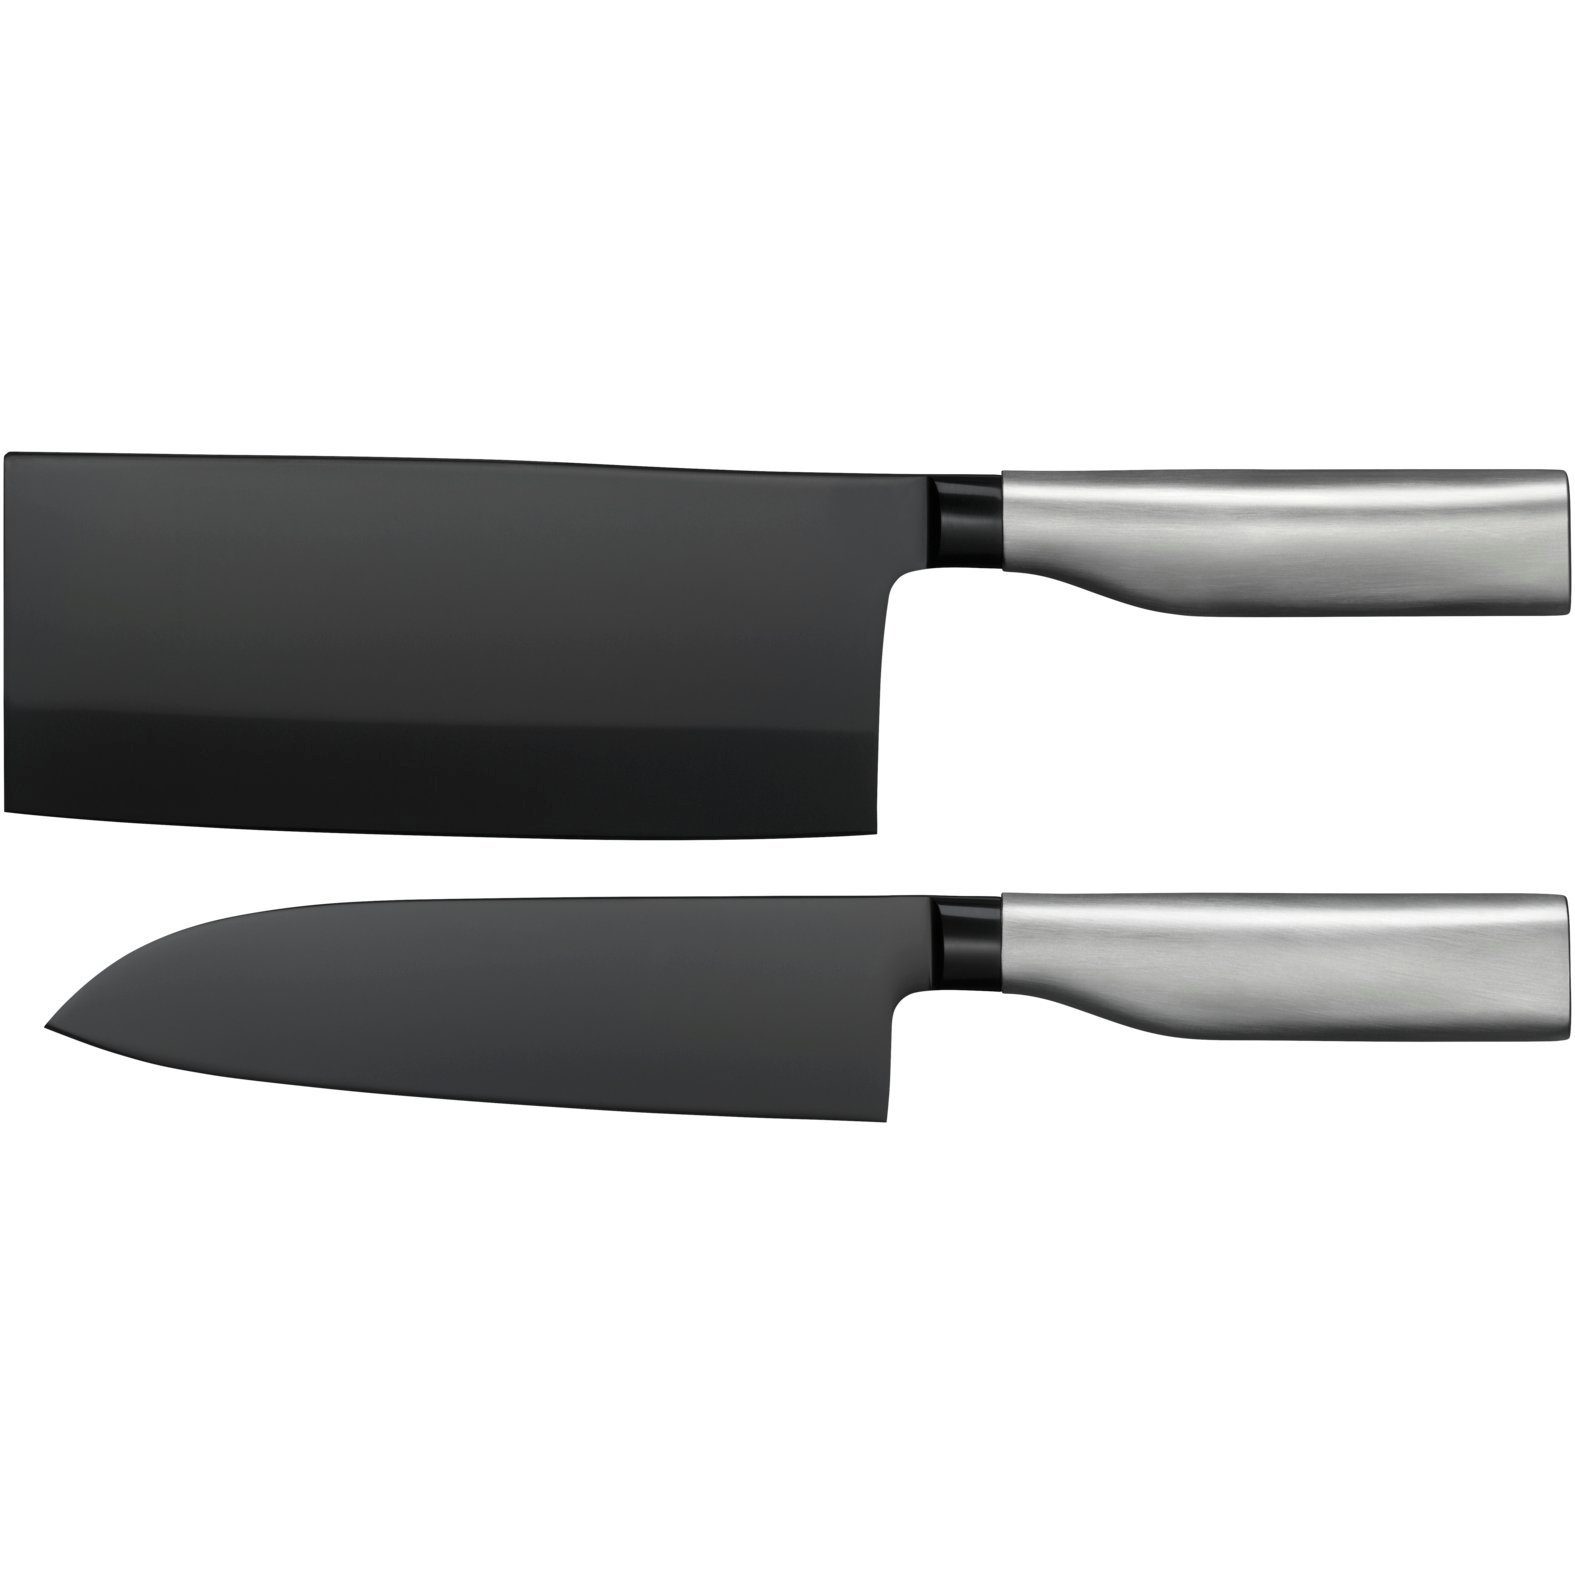 WMF Messer-Set Ultimate Black (2-tlg), Diamond Cut, immerwährende Schärfe, sicherer Fingerschutz